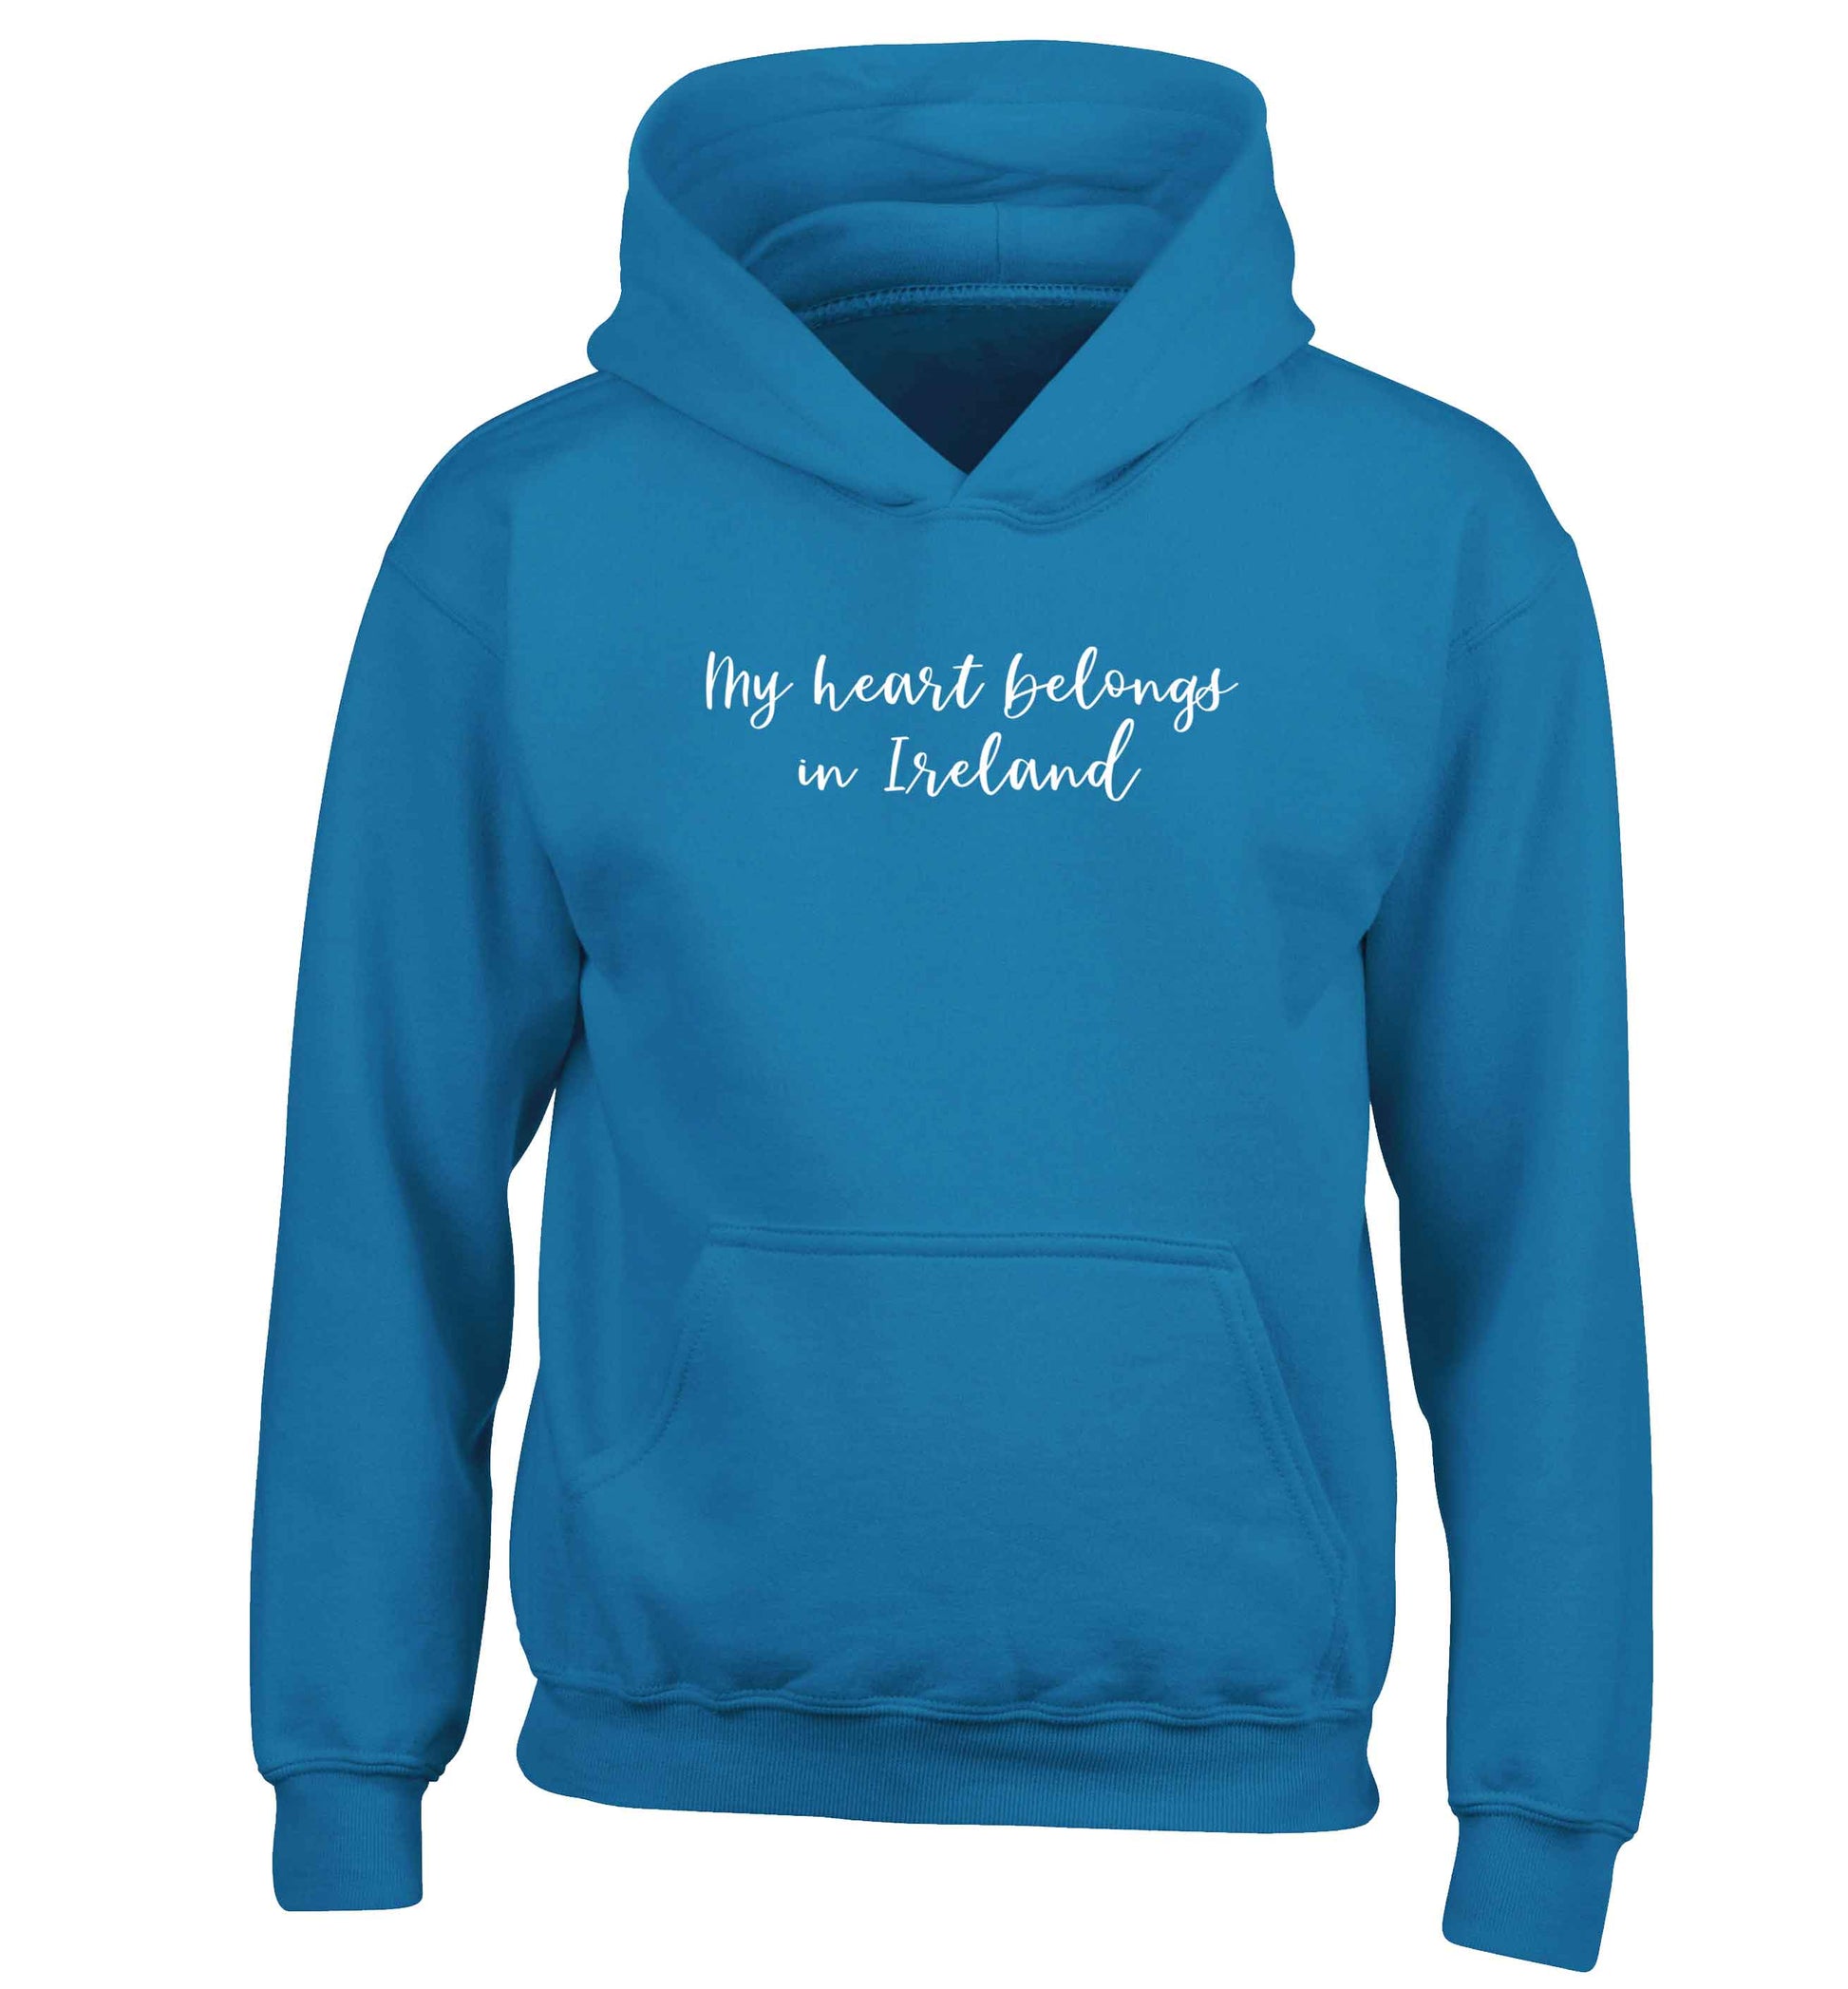 My heart belongs in Ireland children's blue hoodie 12-13 Years